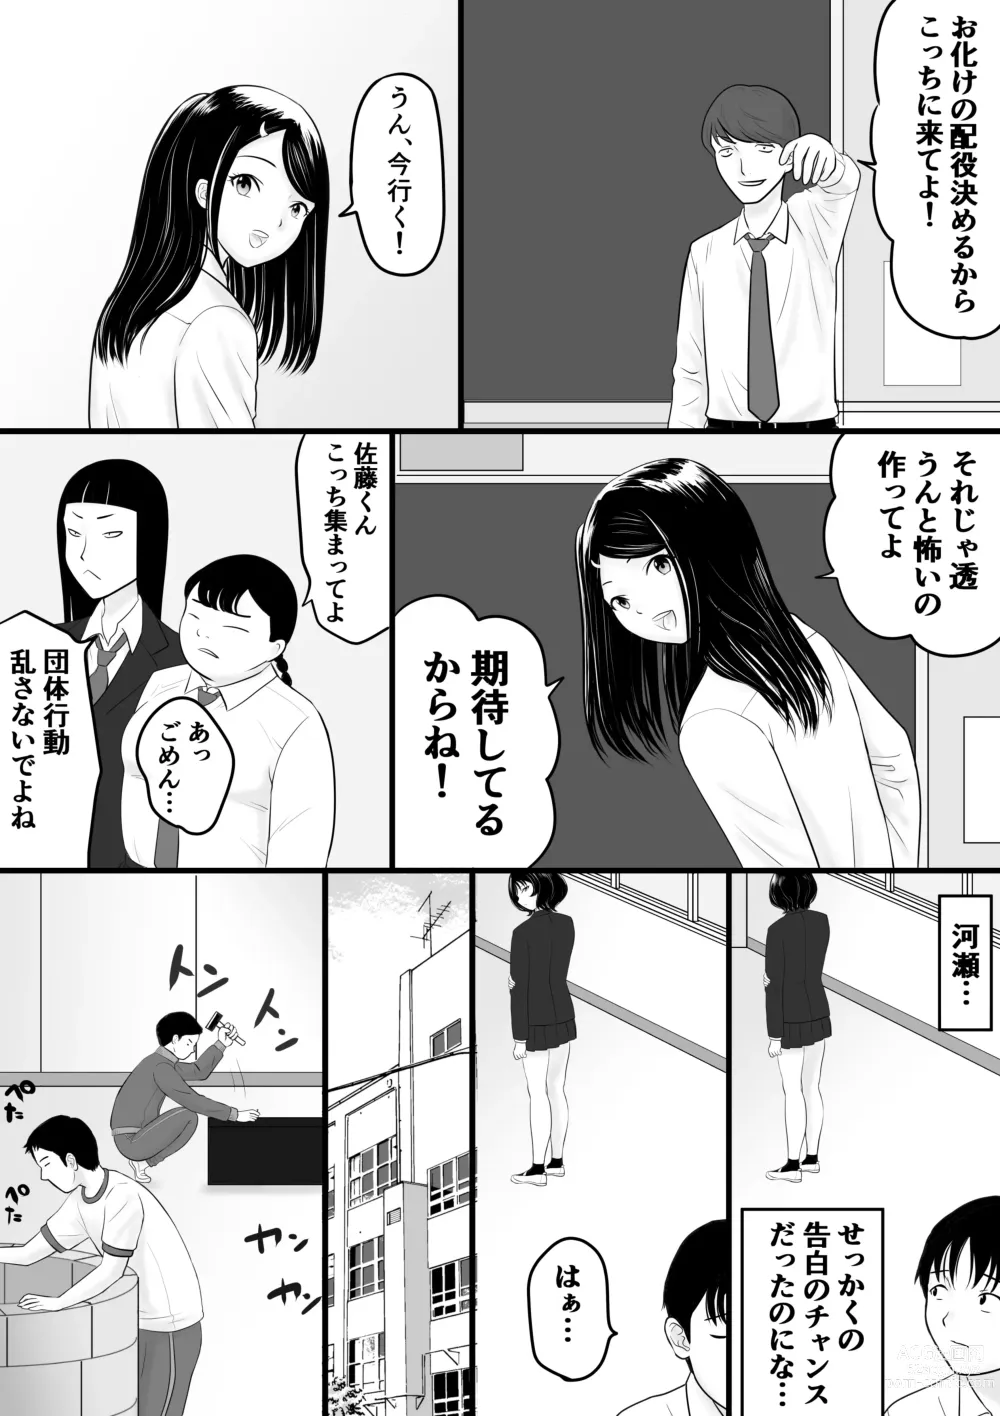 Page 7 of doujinshi Gakusai